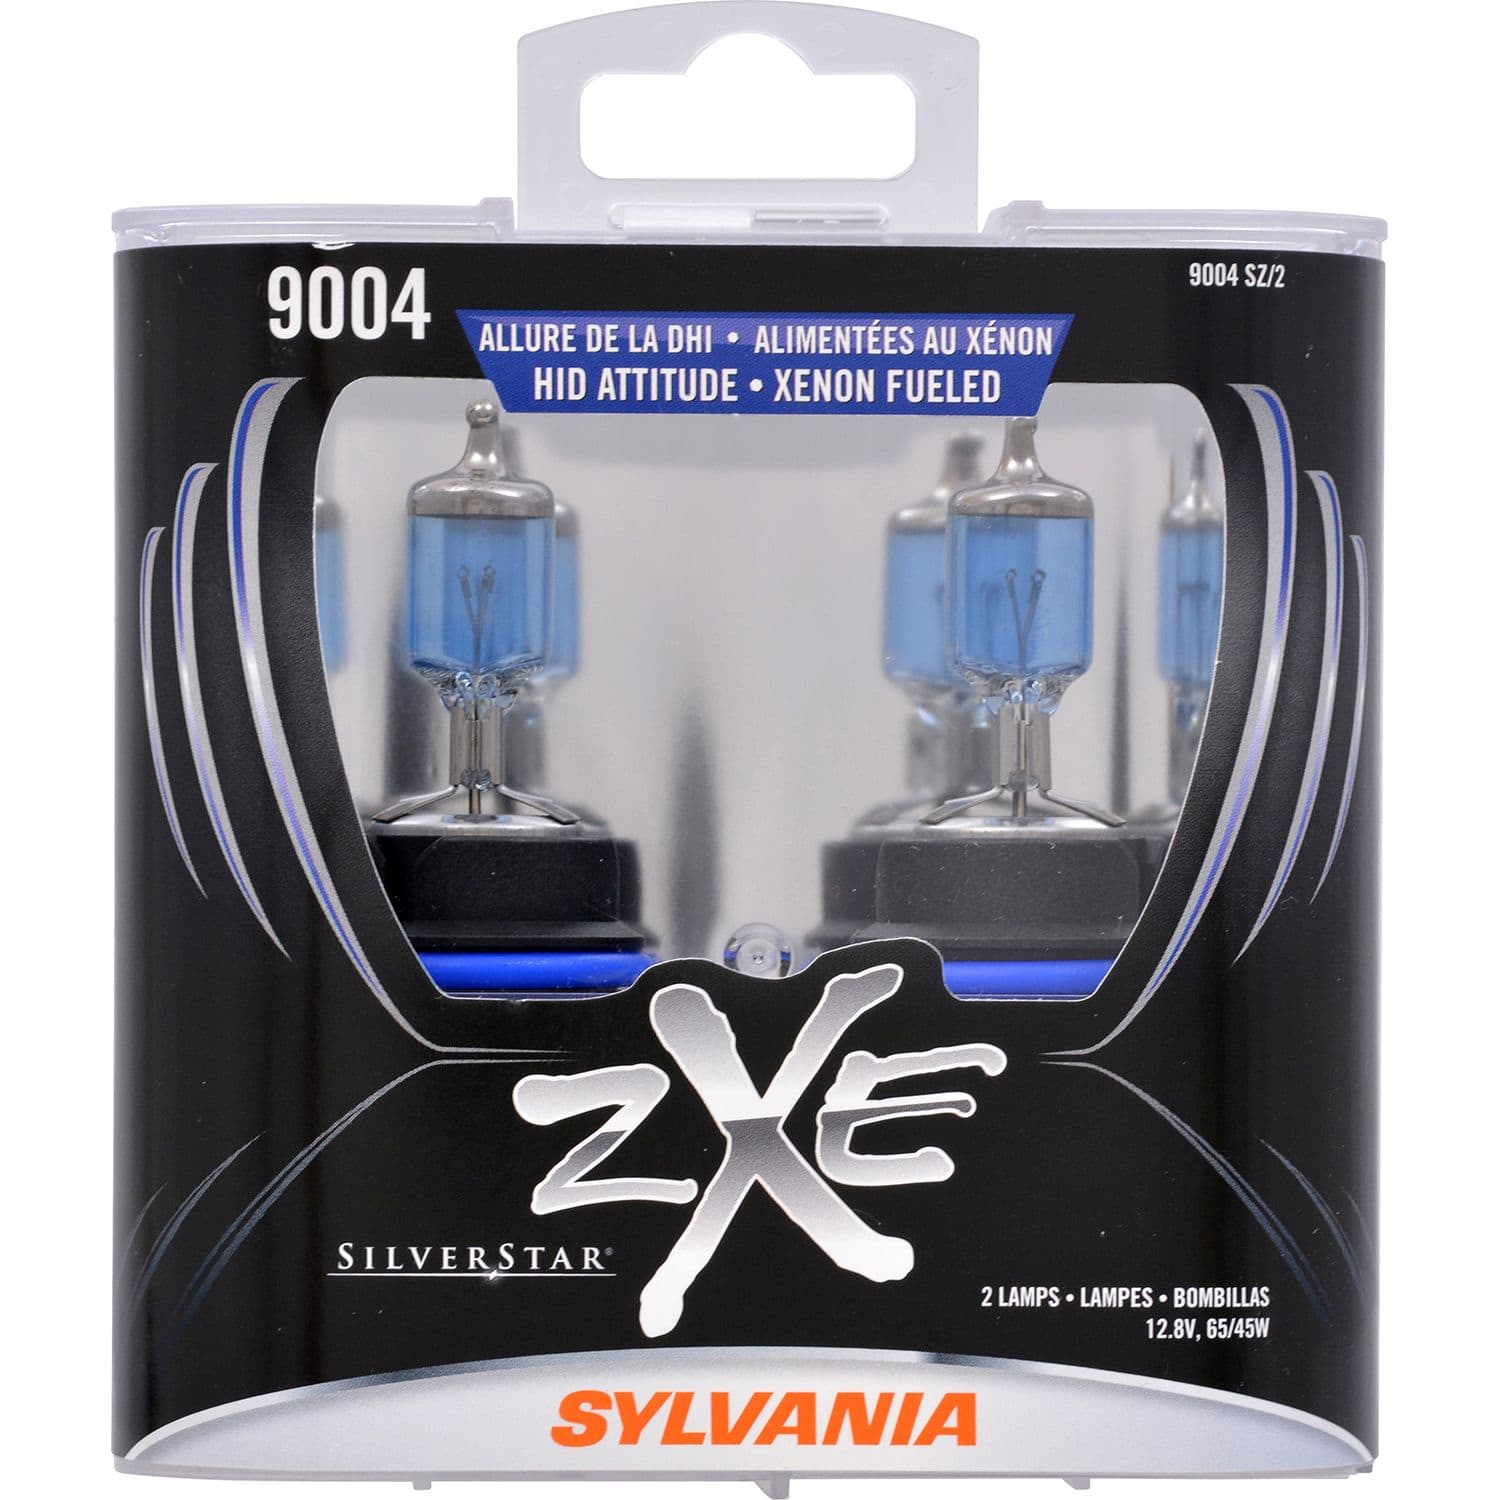 9004 Sylvania SilverStar® zXe Headlight Bulb, 2-pk | Canadian Tire